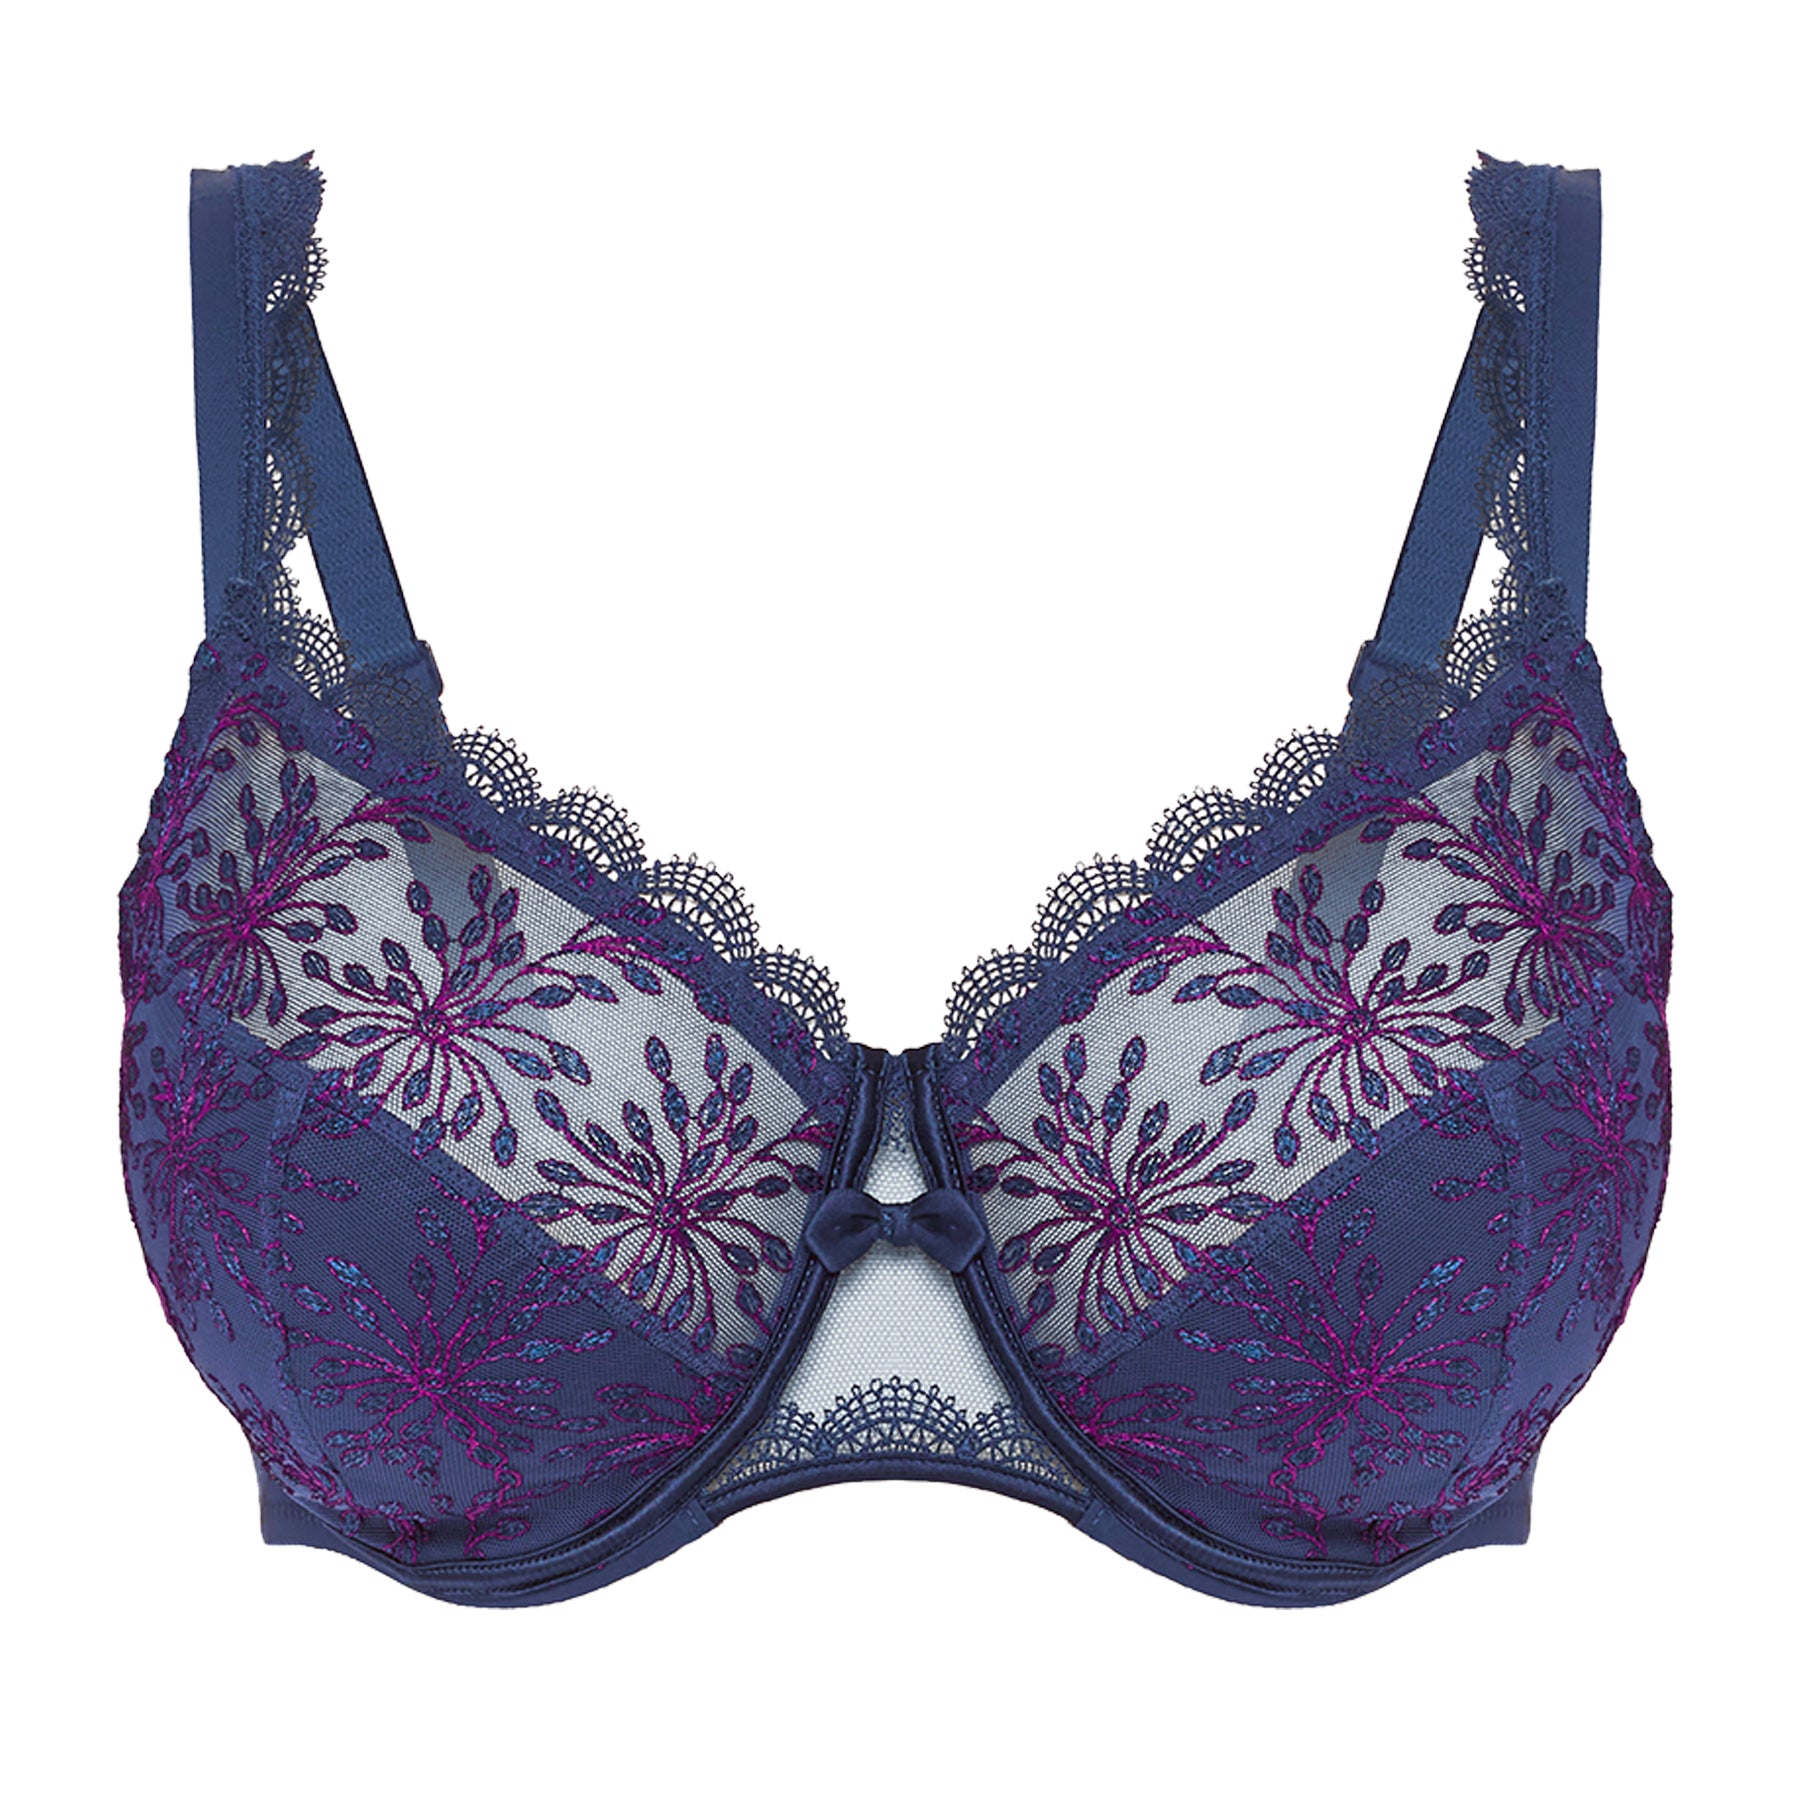 Cacique VERY NICE 40F l full coverage underwire purple polka dot bra Size  40 F / DDD - $19 - From Tiffany